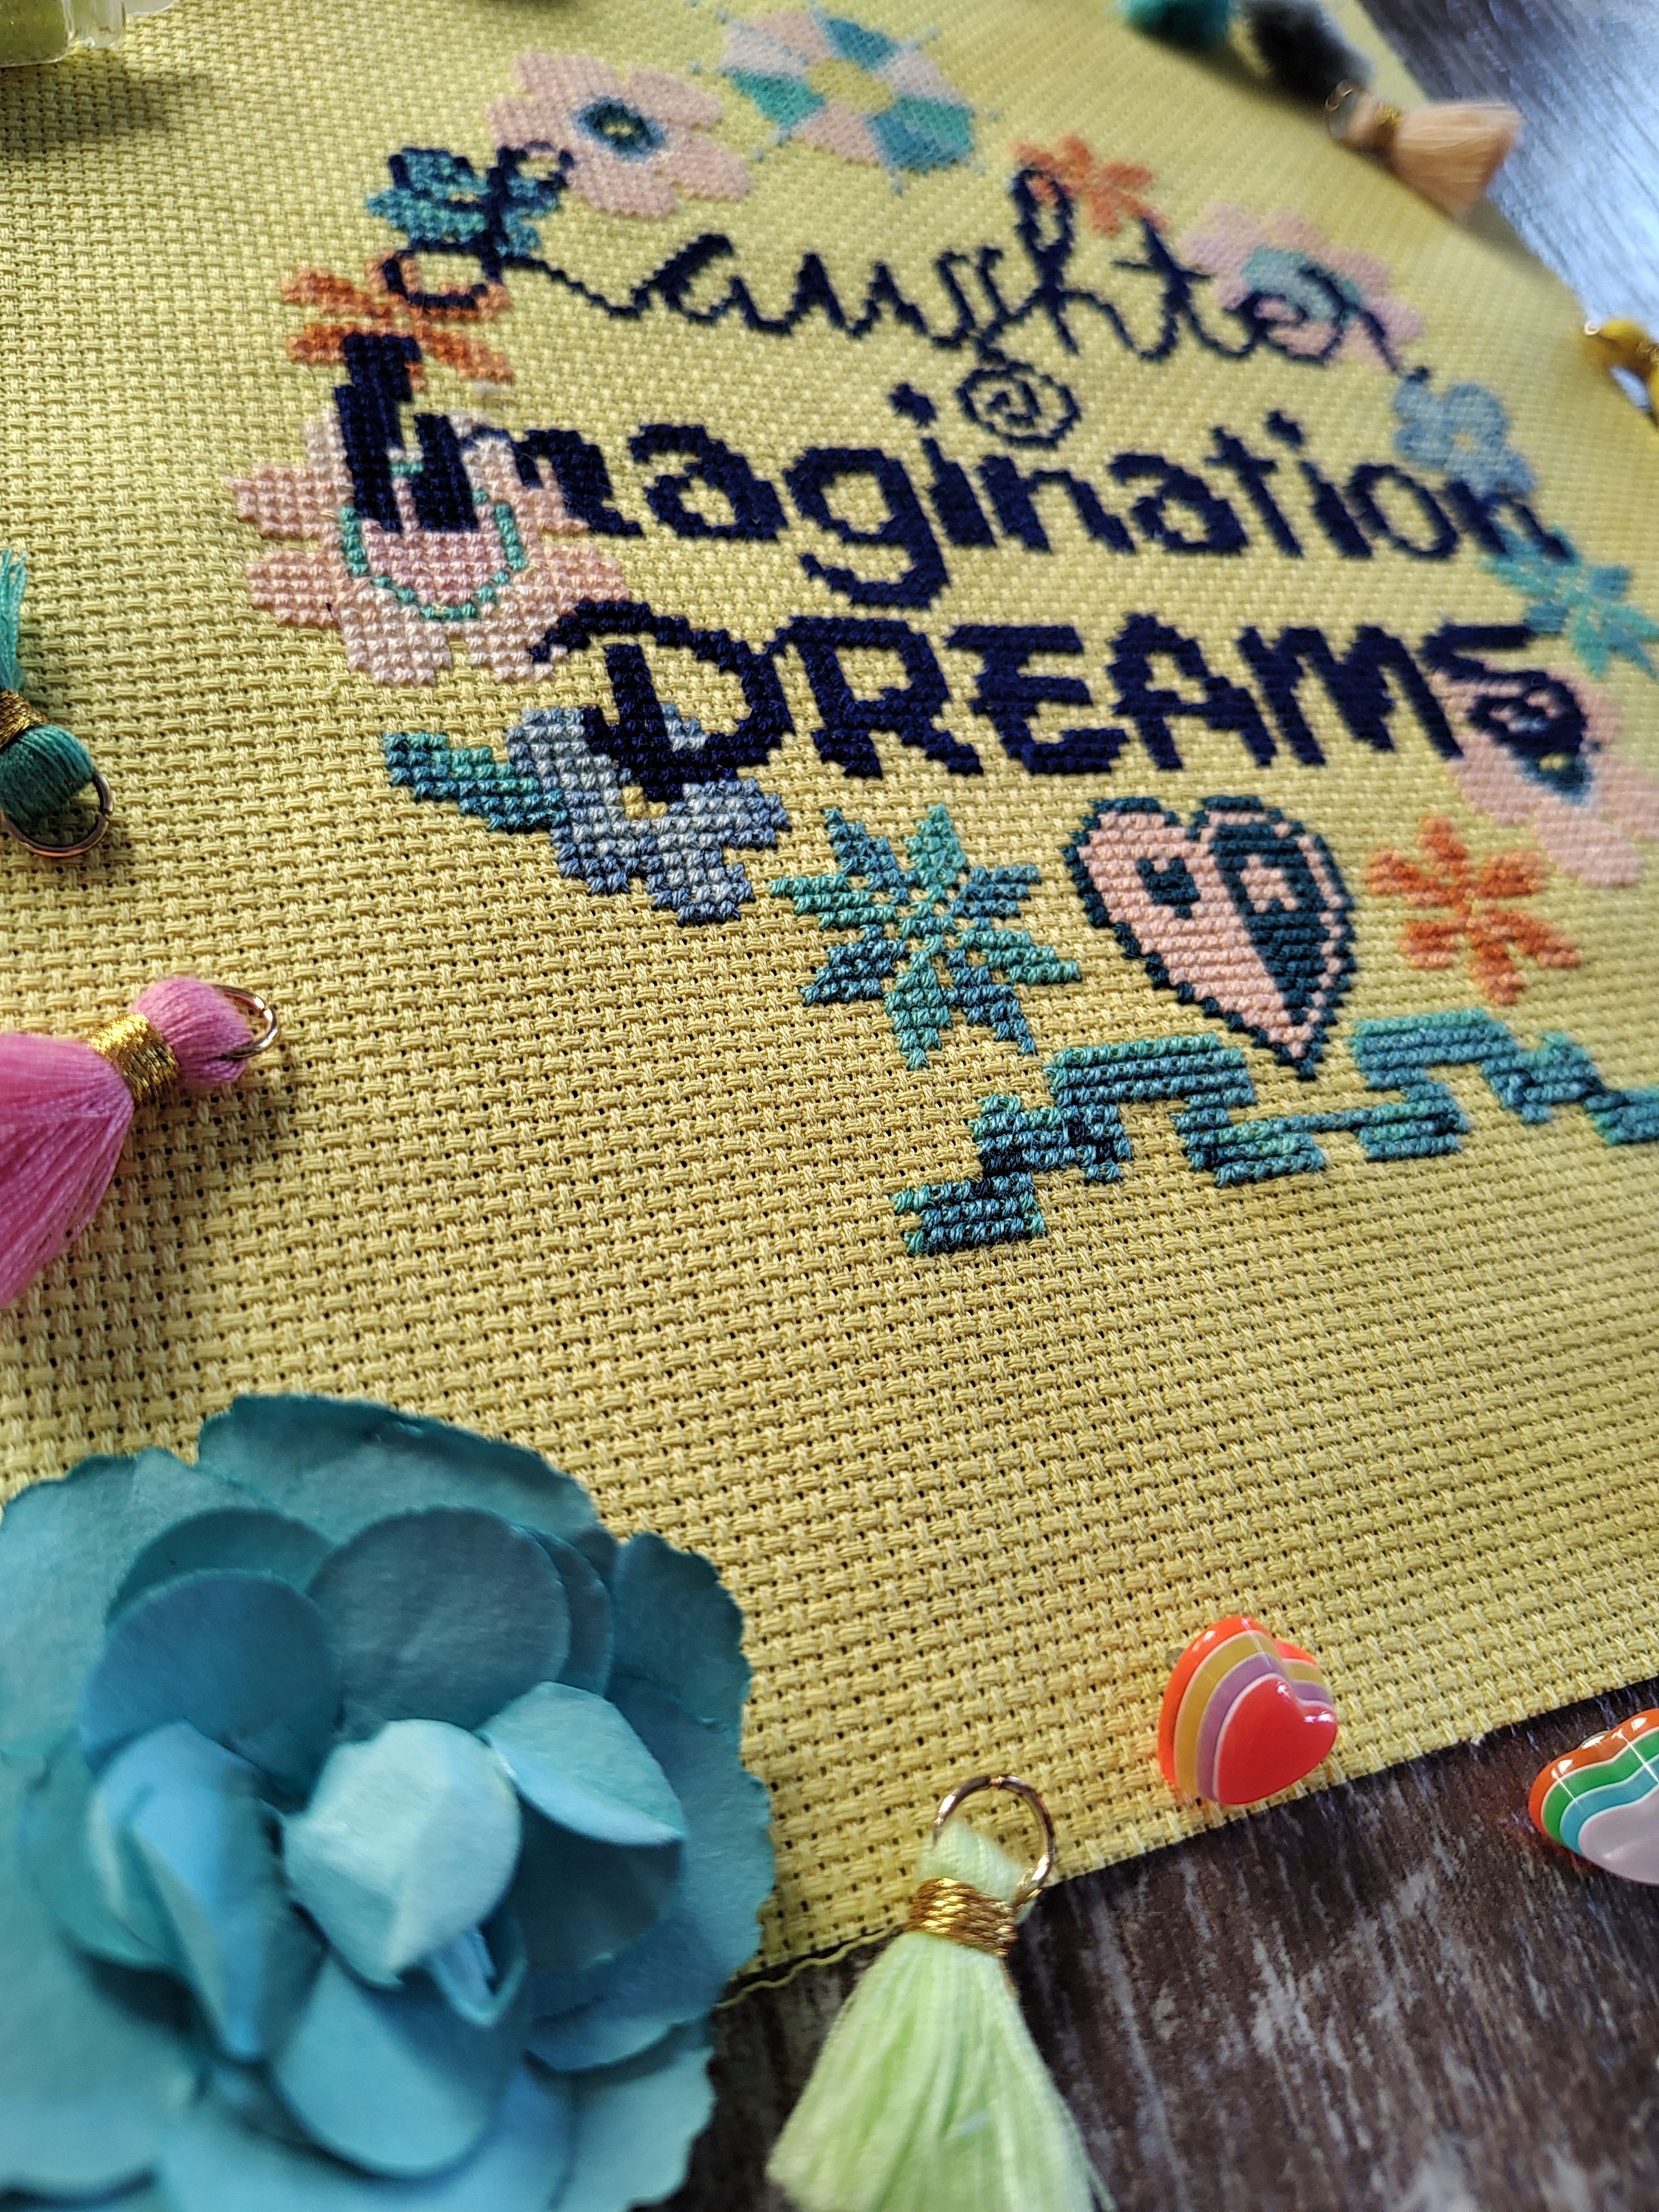 Laughter Imagination Dreams - Cute Cross Stitch Pattern Walt Disney